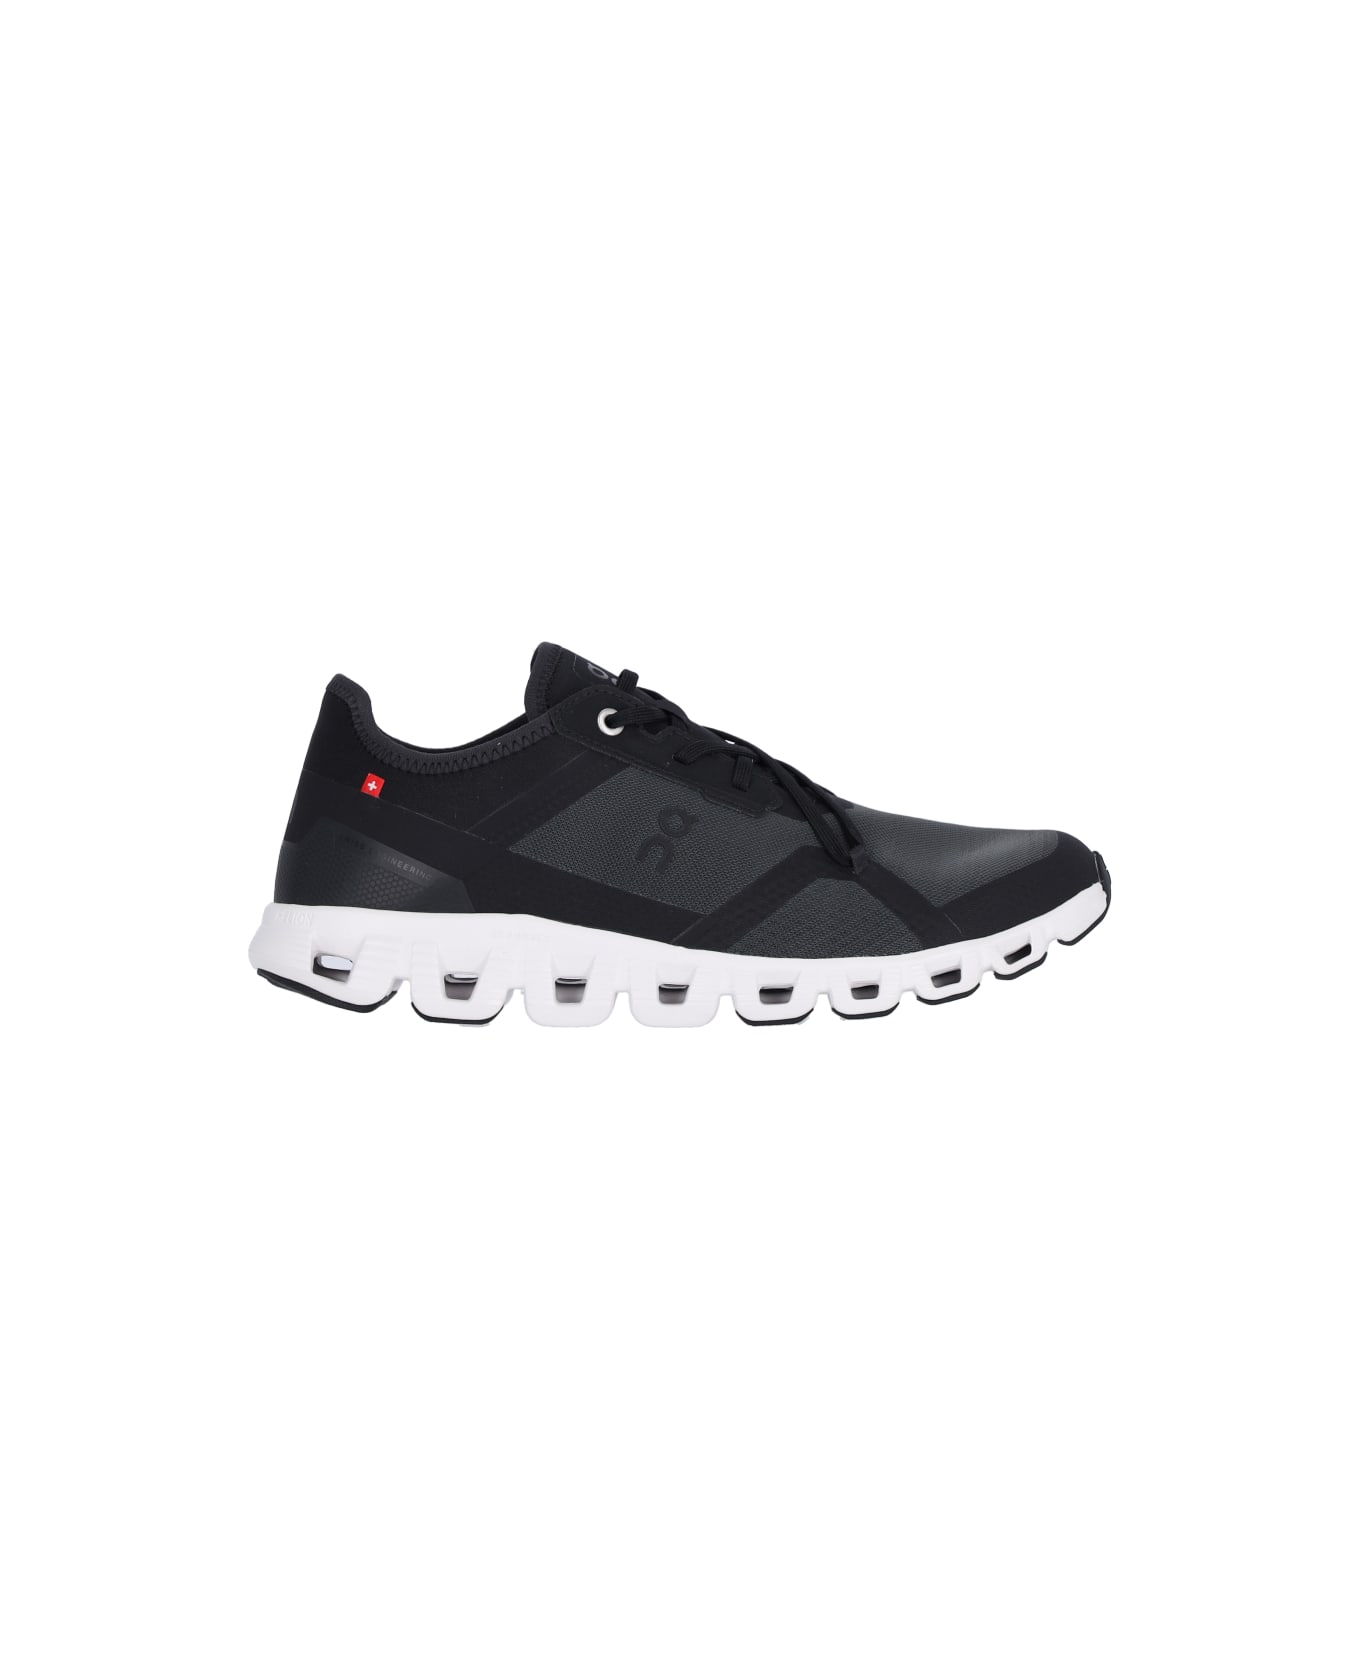 ON 'cloud X 3 Ad' Sneakers - Black   スニーカー